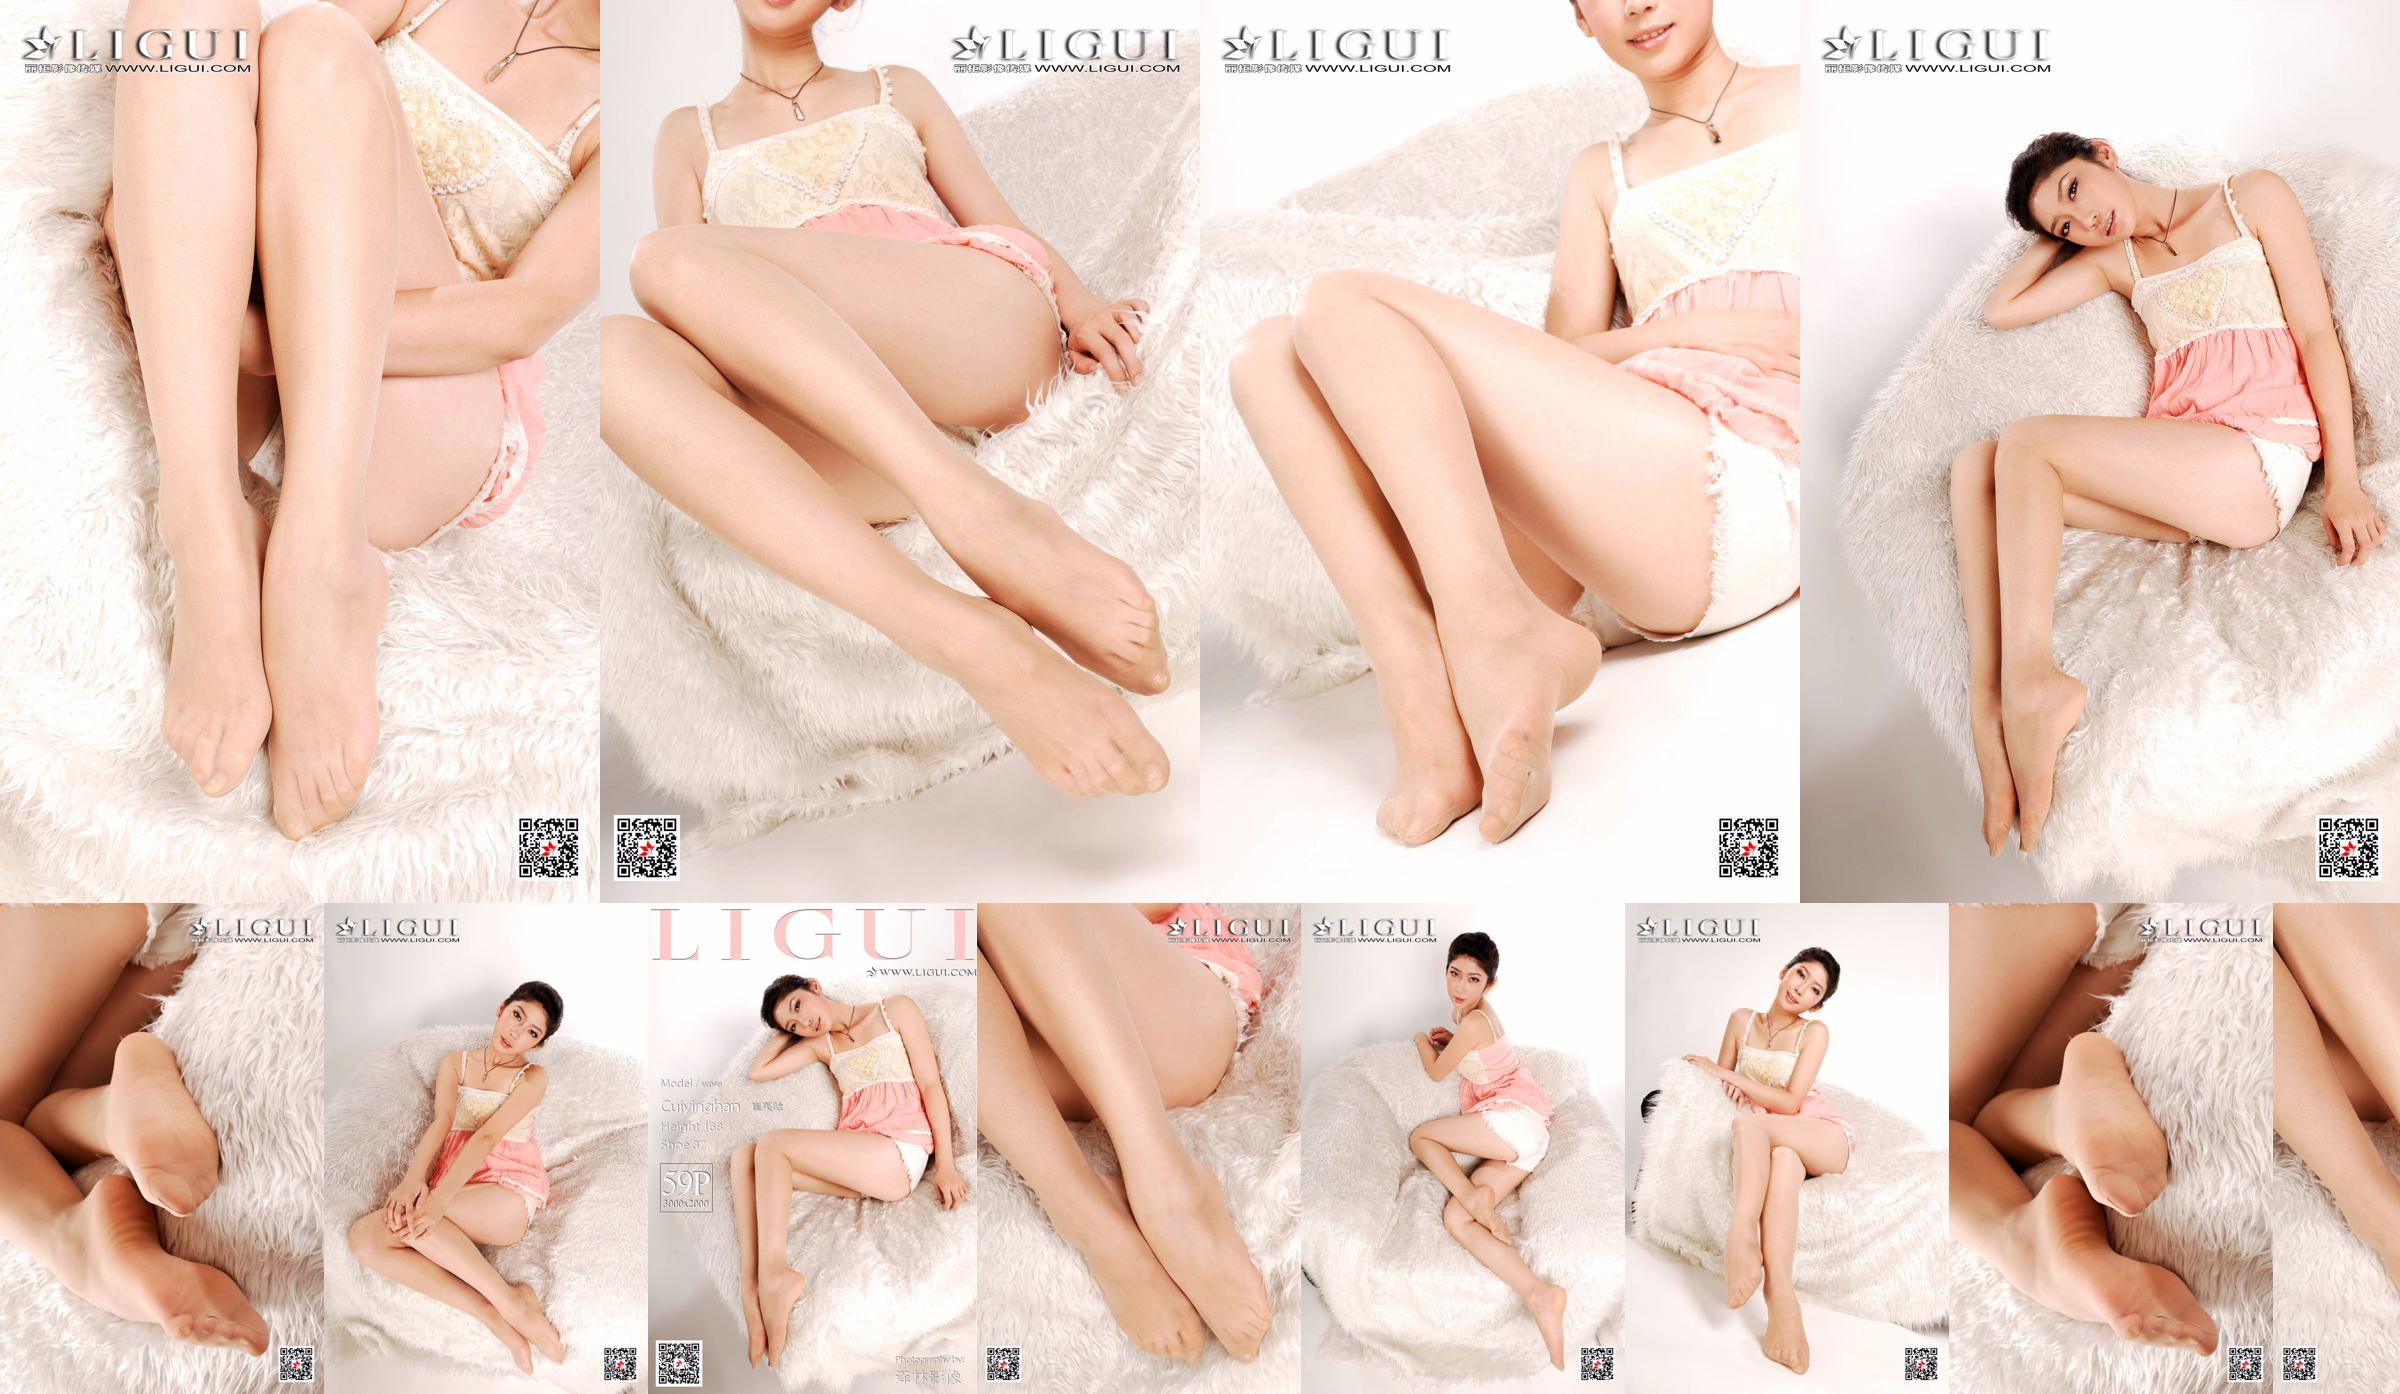 Model Cui Yinghan "Ross und Jadefuß" [Ligui Ligui] No.6ddfdf Seite 1